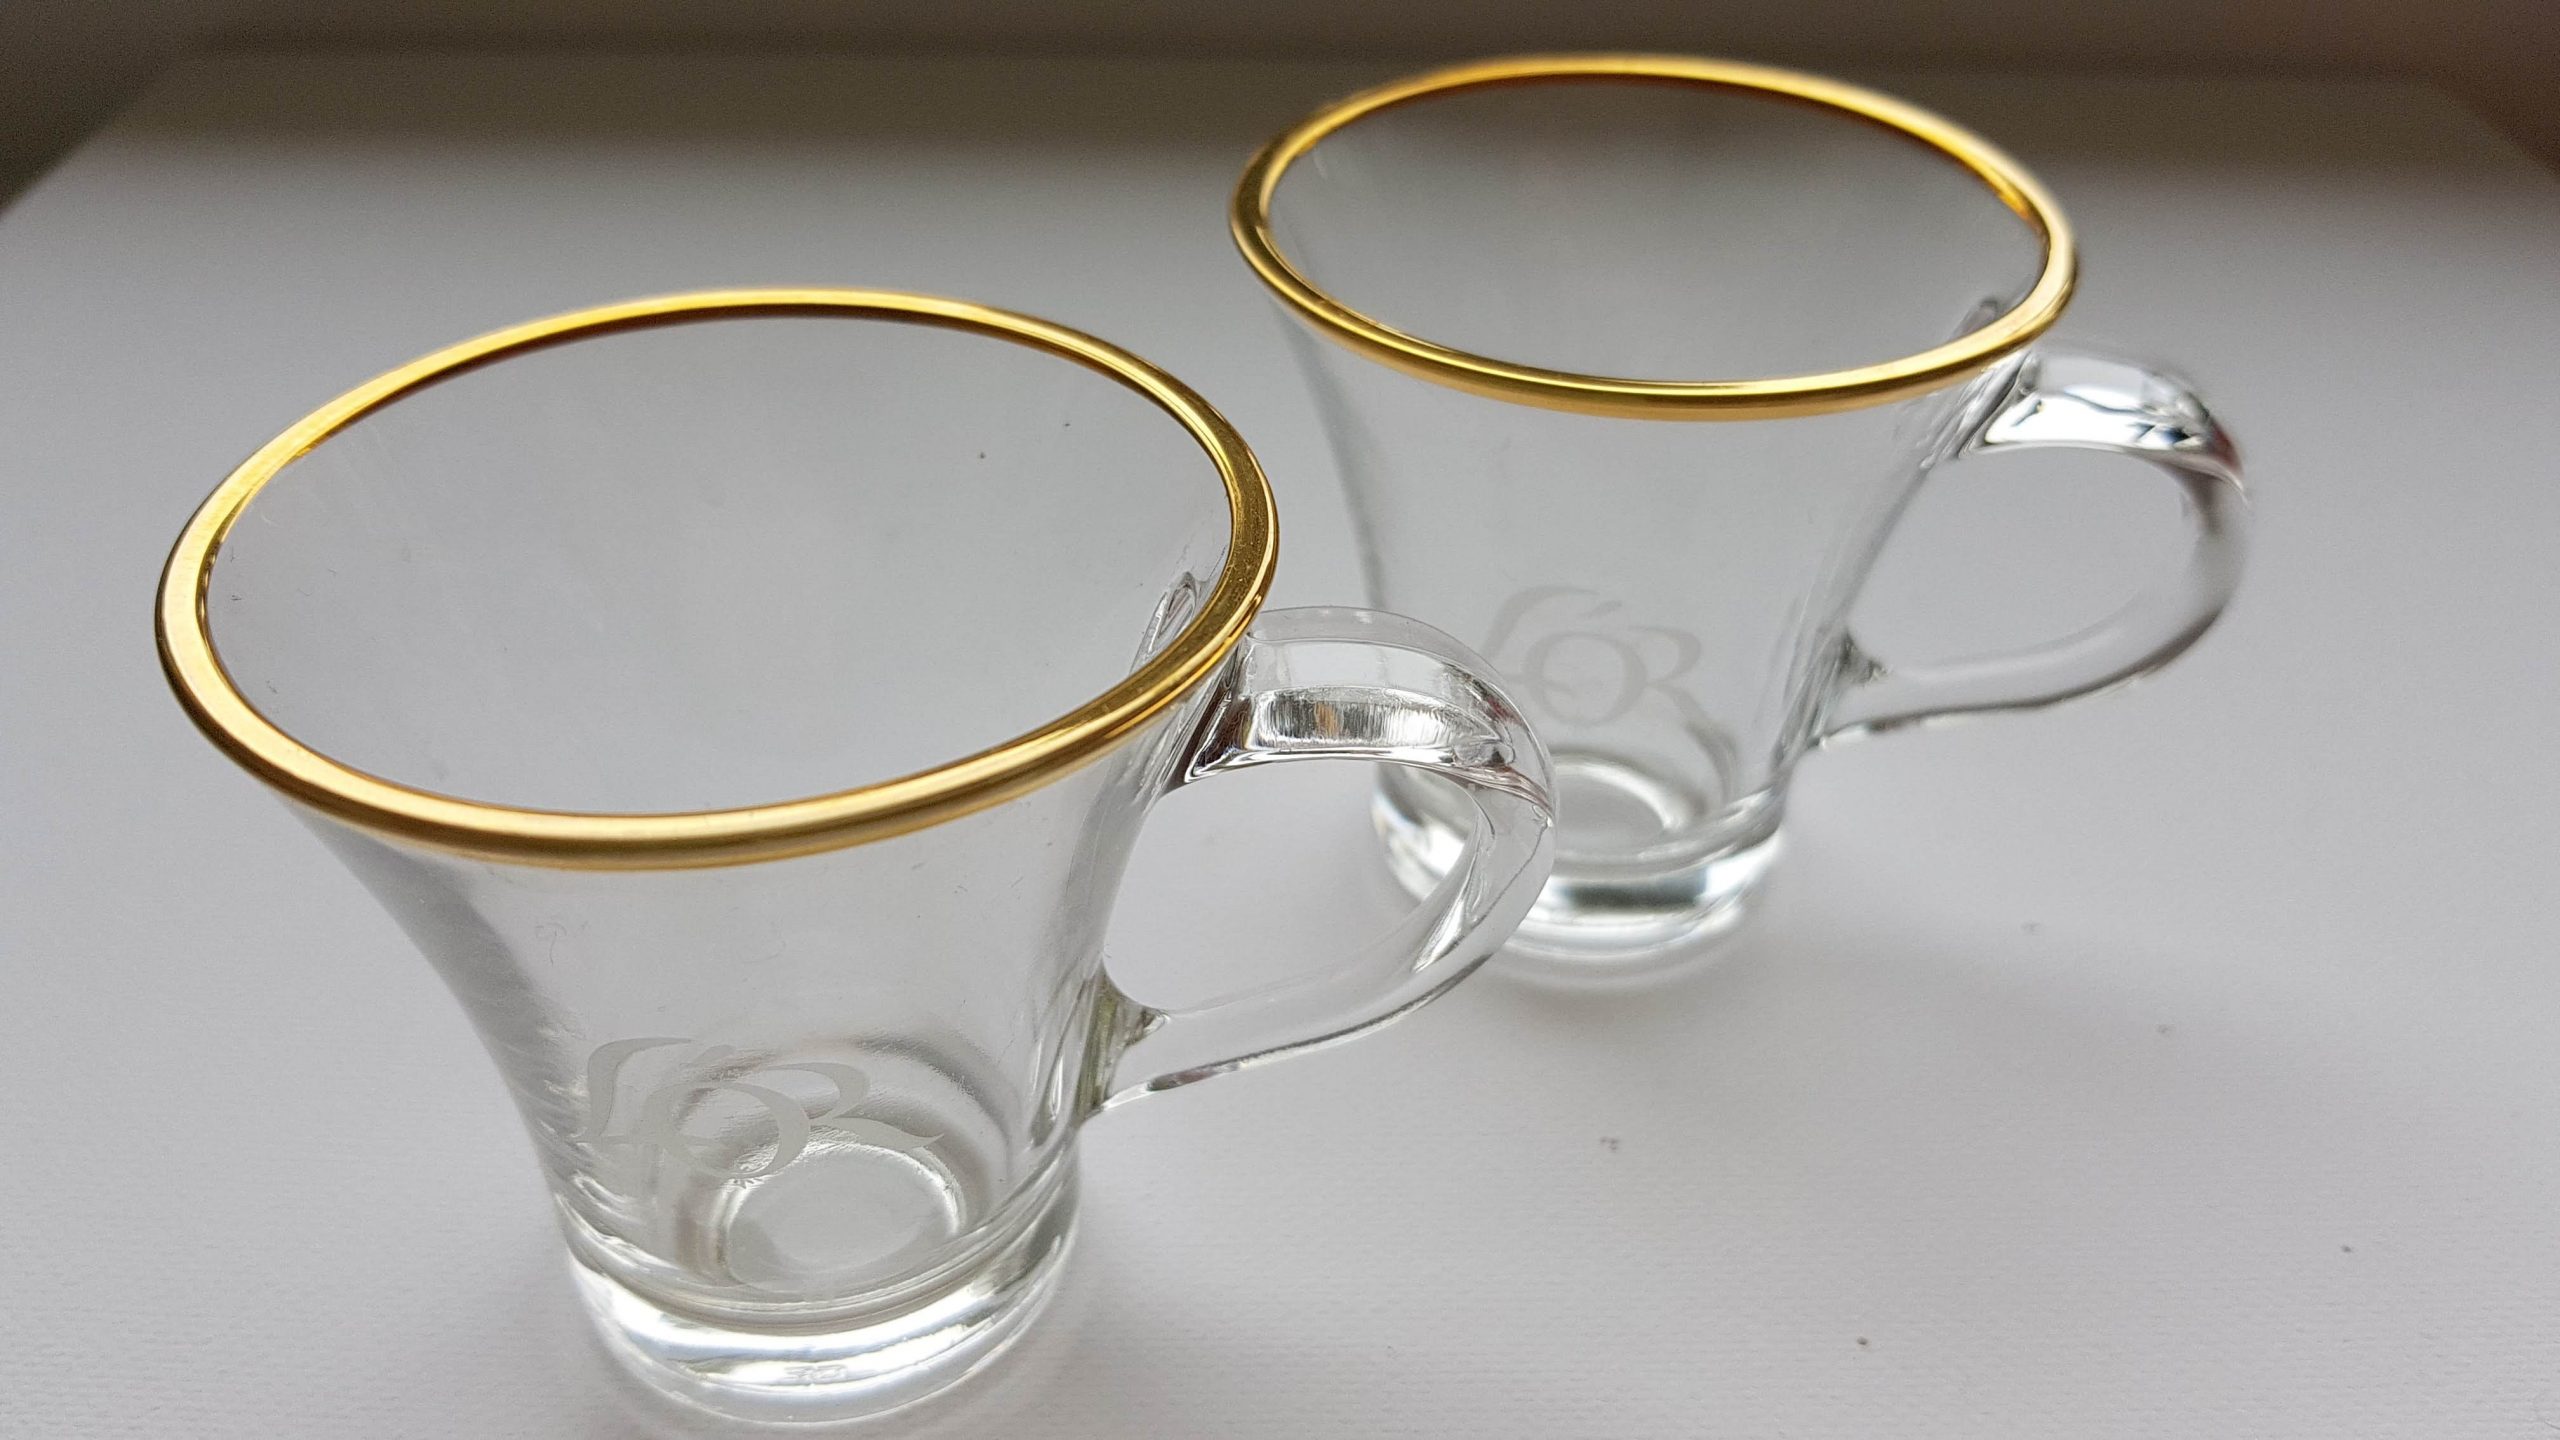 agenda chaos Wetenschap L'Or. Espresso kopje glas met gouden rand. 🌺 Vintage Webshop SennaBenna